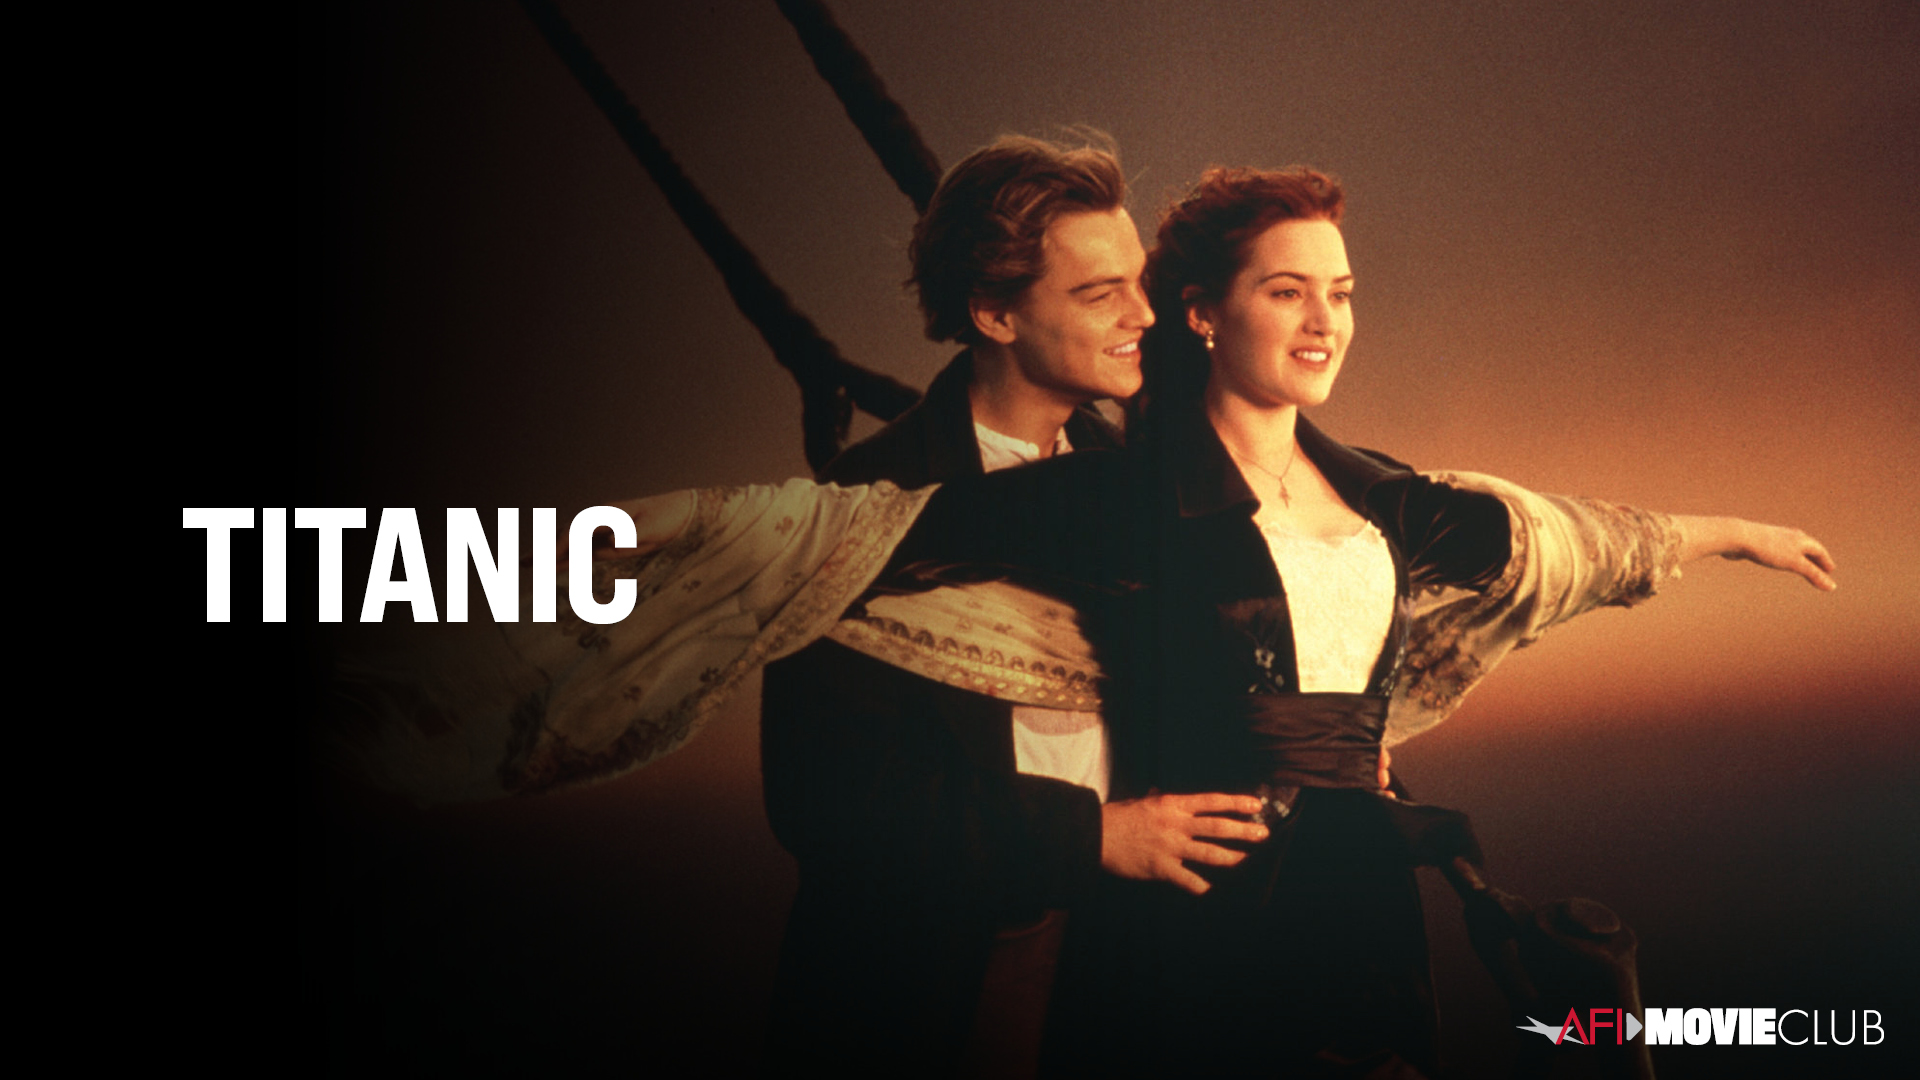 Titanic Film Still - Leonardo DiCaprio and Kate Winslet